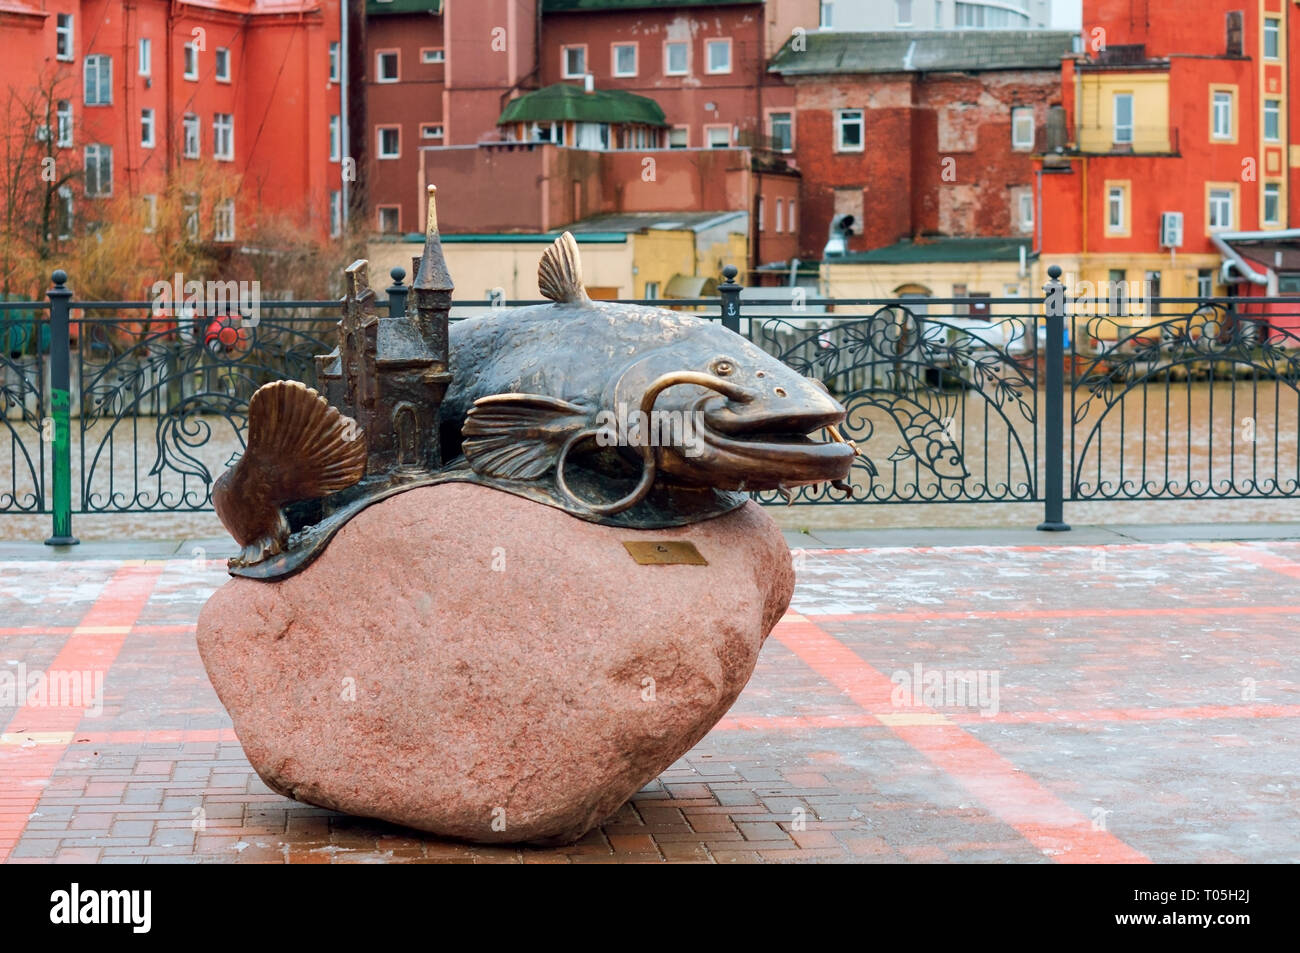 monument 'Catfish', a bronze monument to the 'Fish catfish', Kaliningrad, Russia, January 05, 2019 Stock Photo